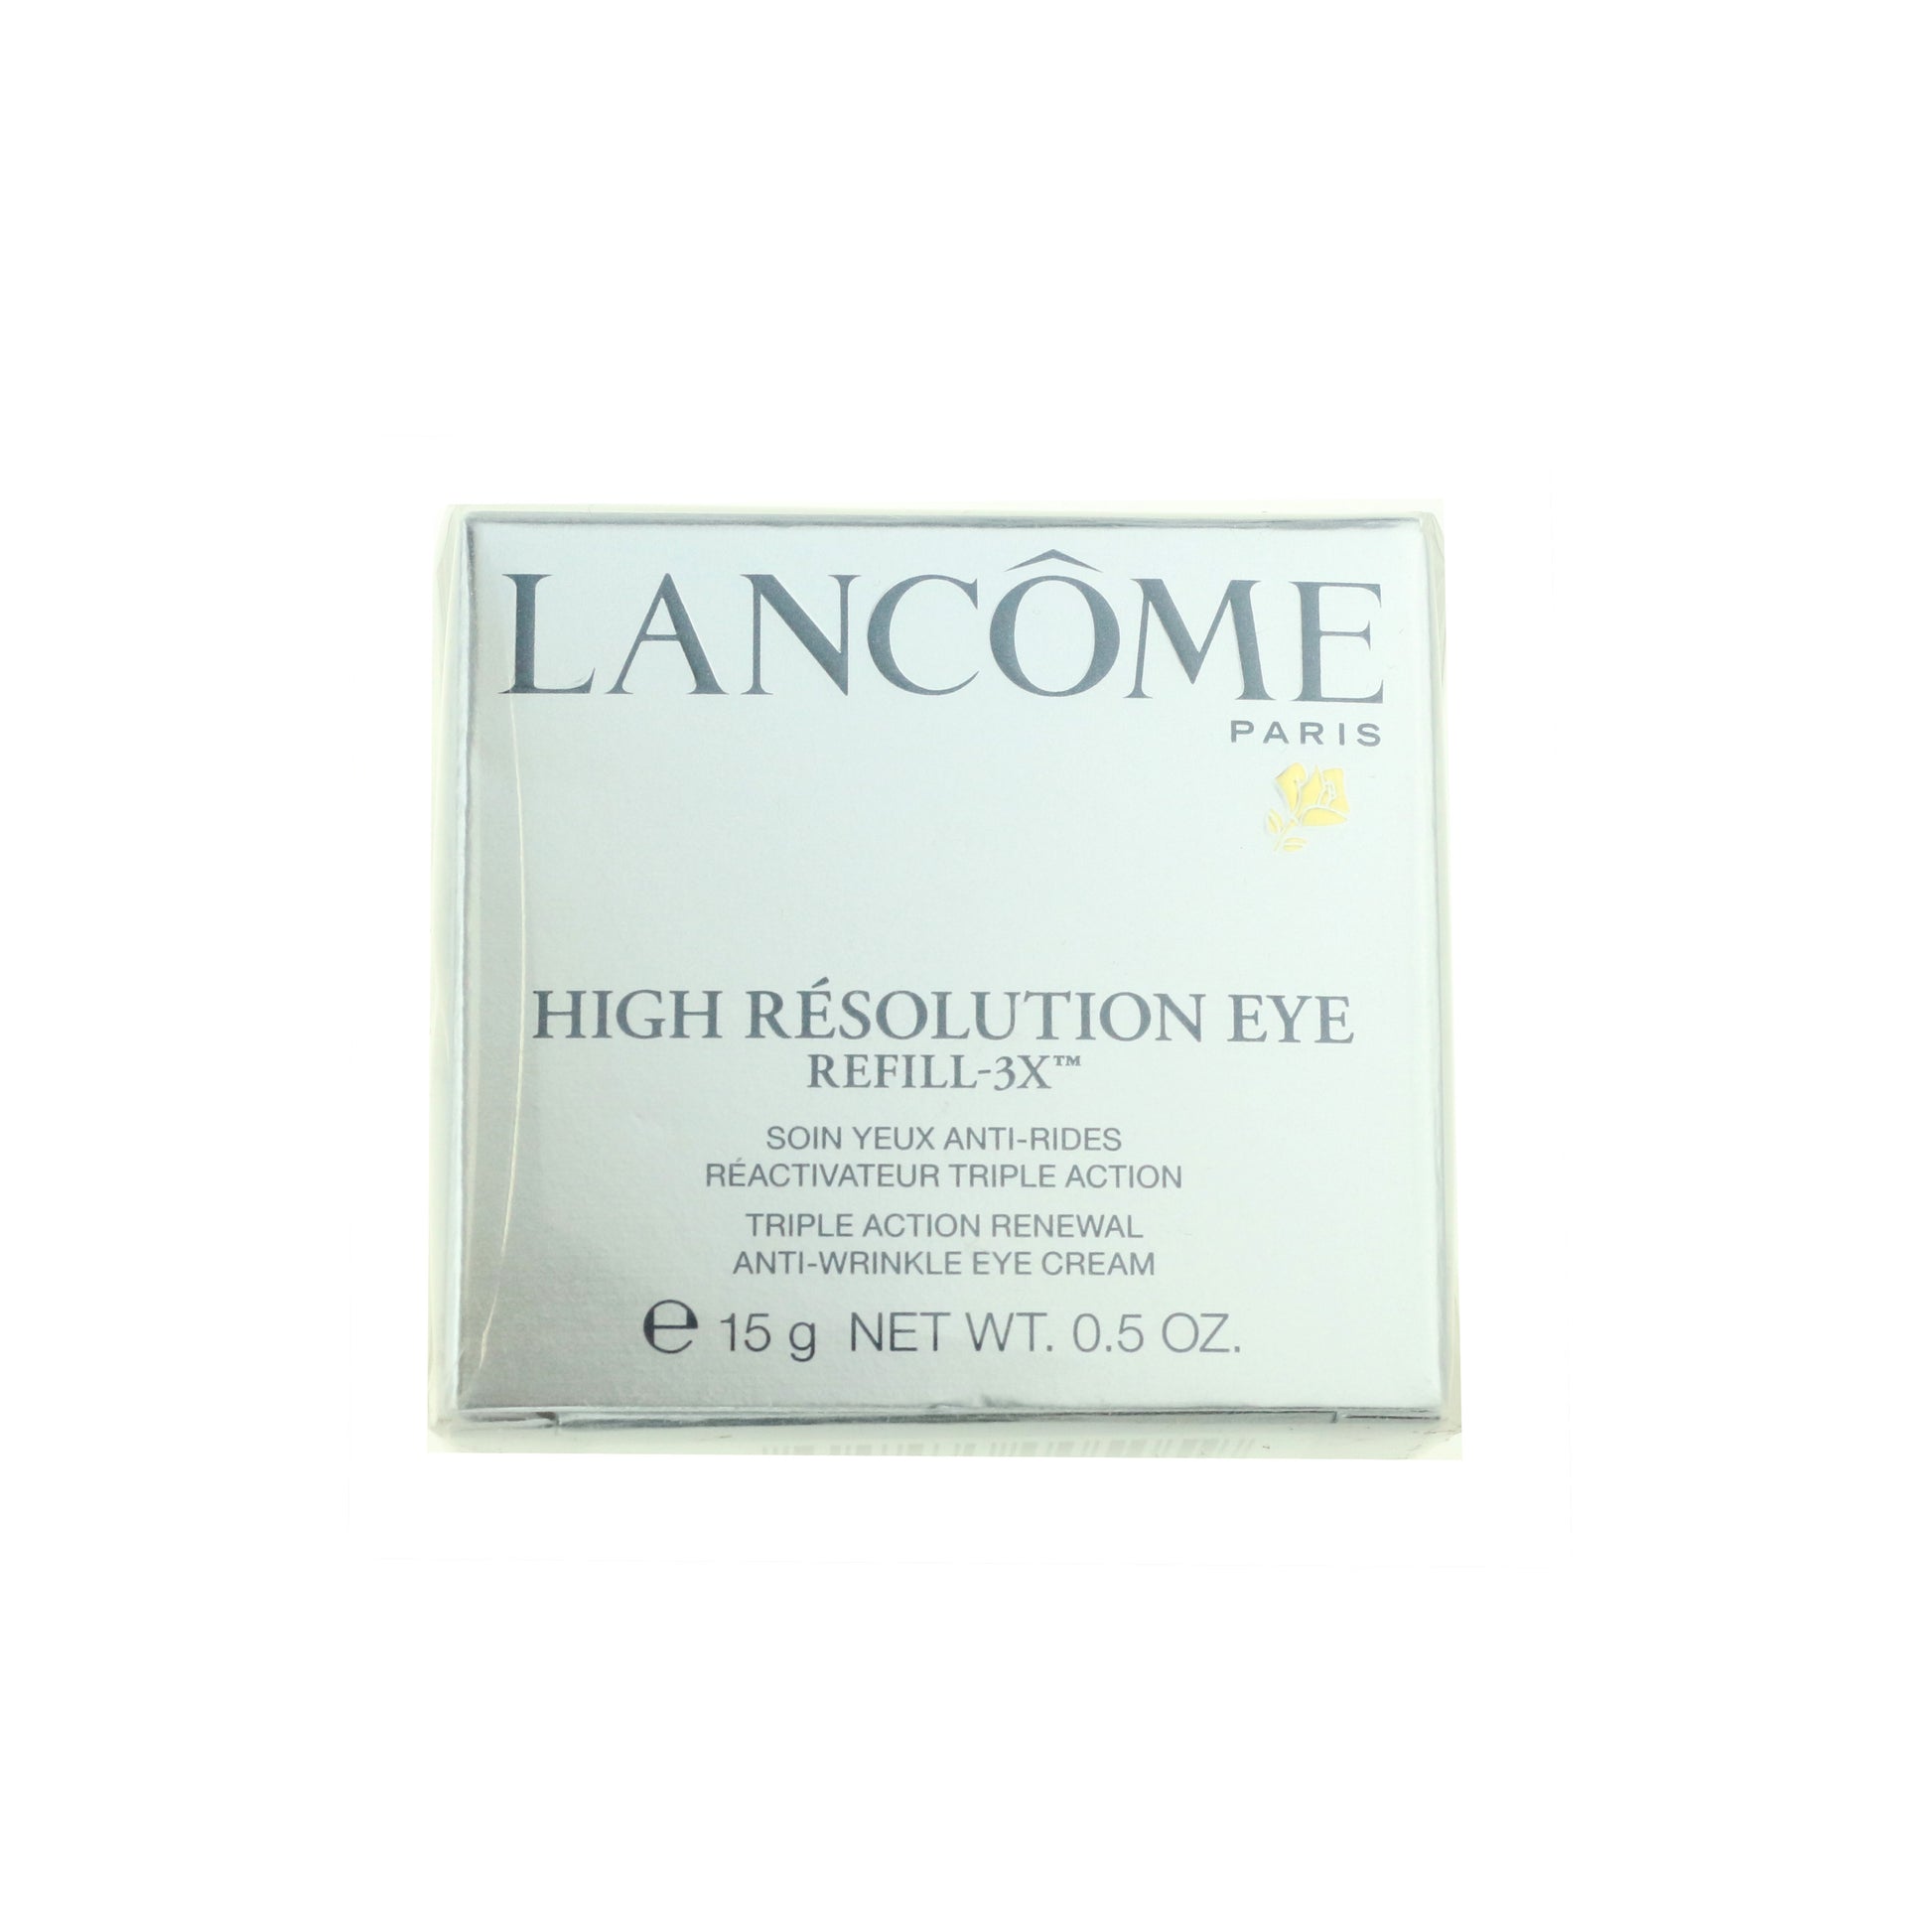 High Resoution Eye Refill-3X Anti-Wrinkle Eye Cream 0.5 oz